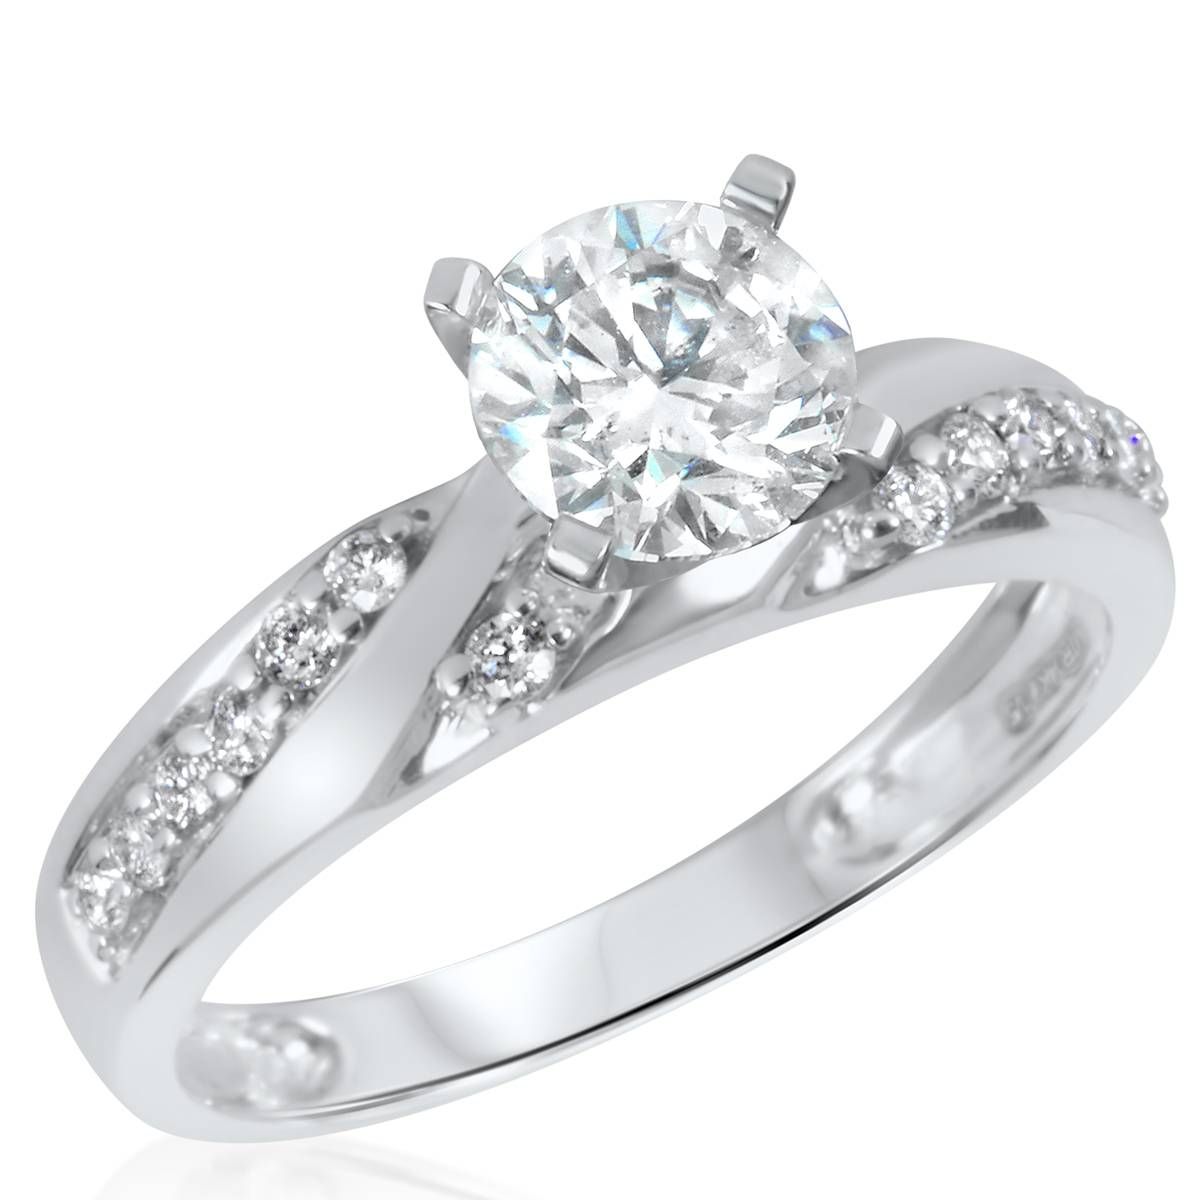 Wedding Rings : Wedding Rings For Women White Gold White Gold For White Gold Diamond Wedding Bands For Women (View 8 of 15)